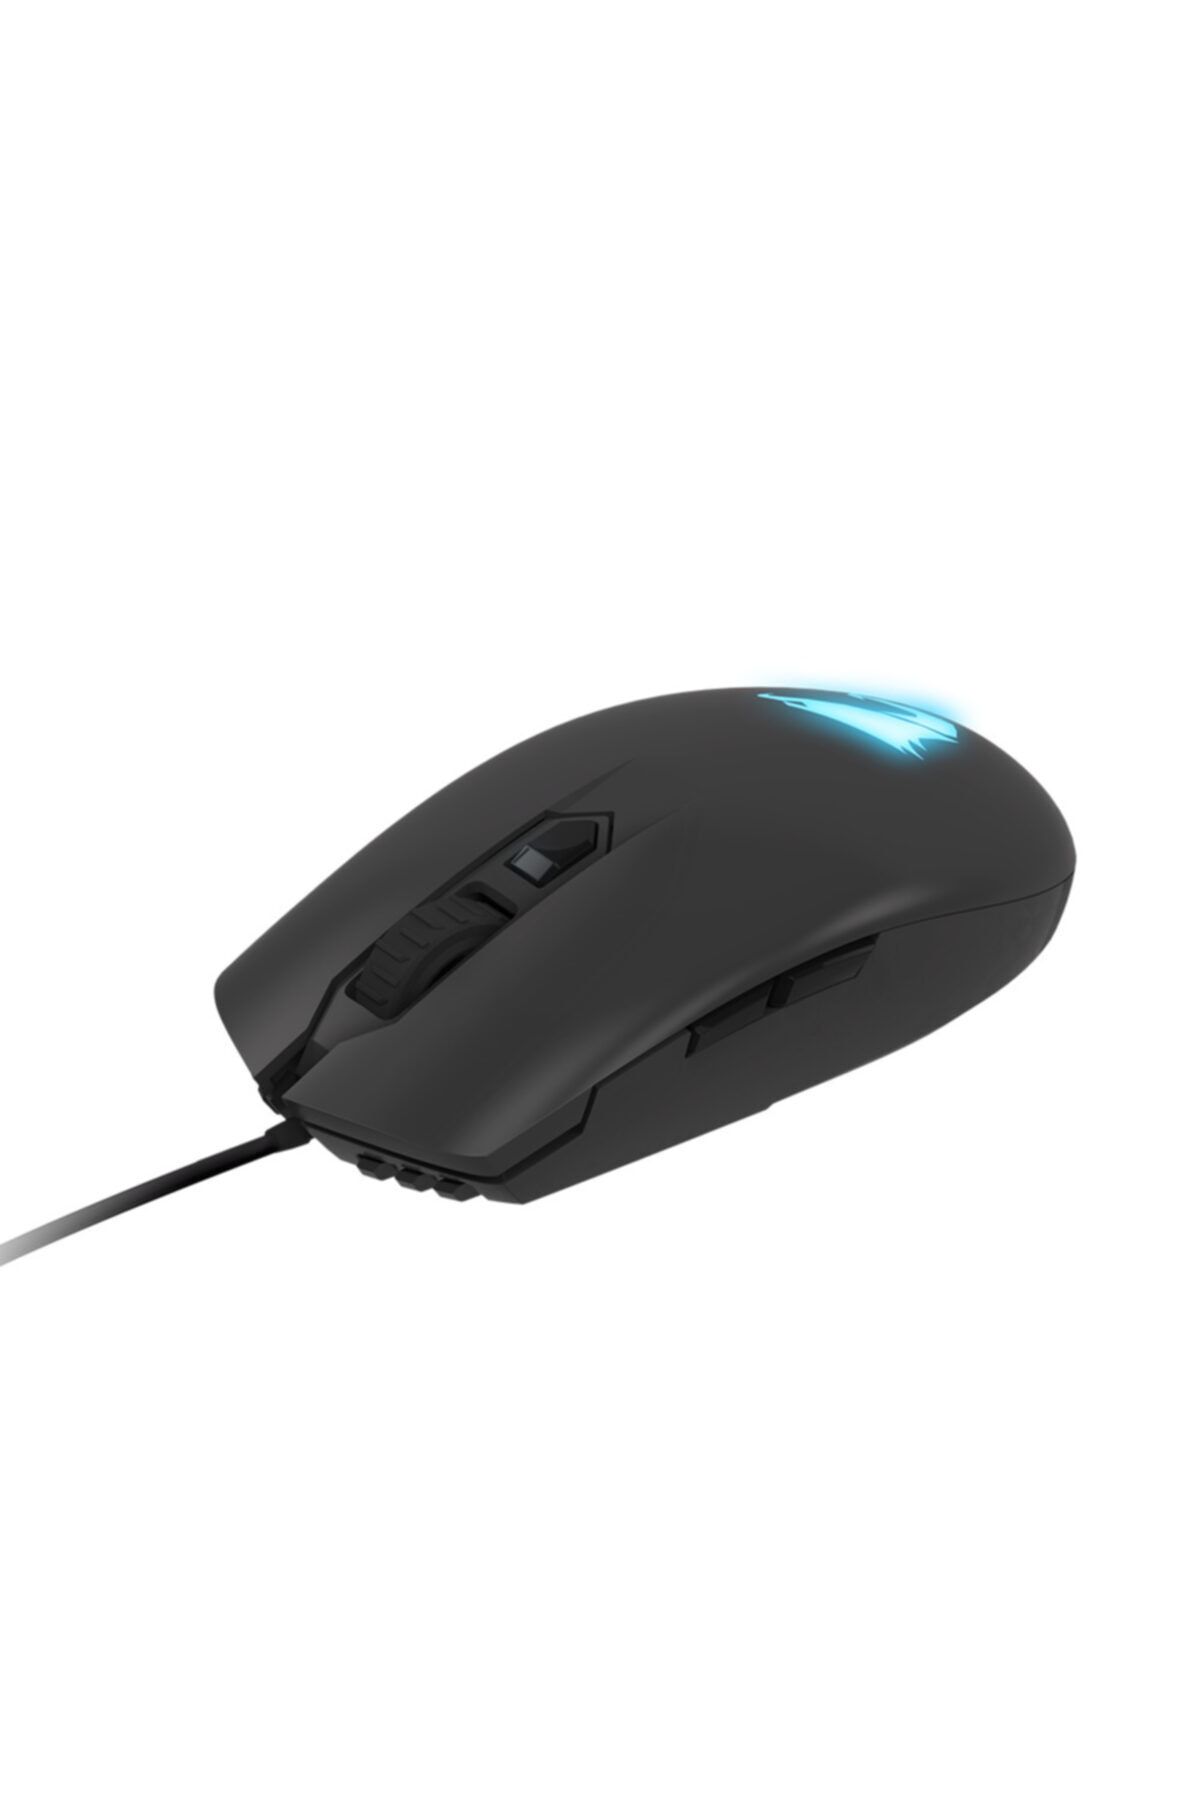 Gigabyte -aks Aorus M2 Gaming Mouse